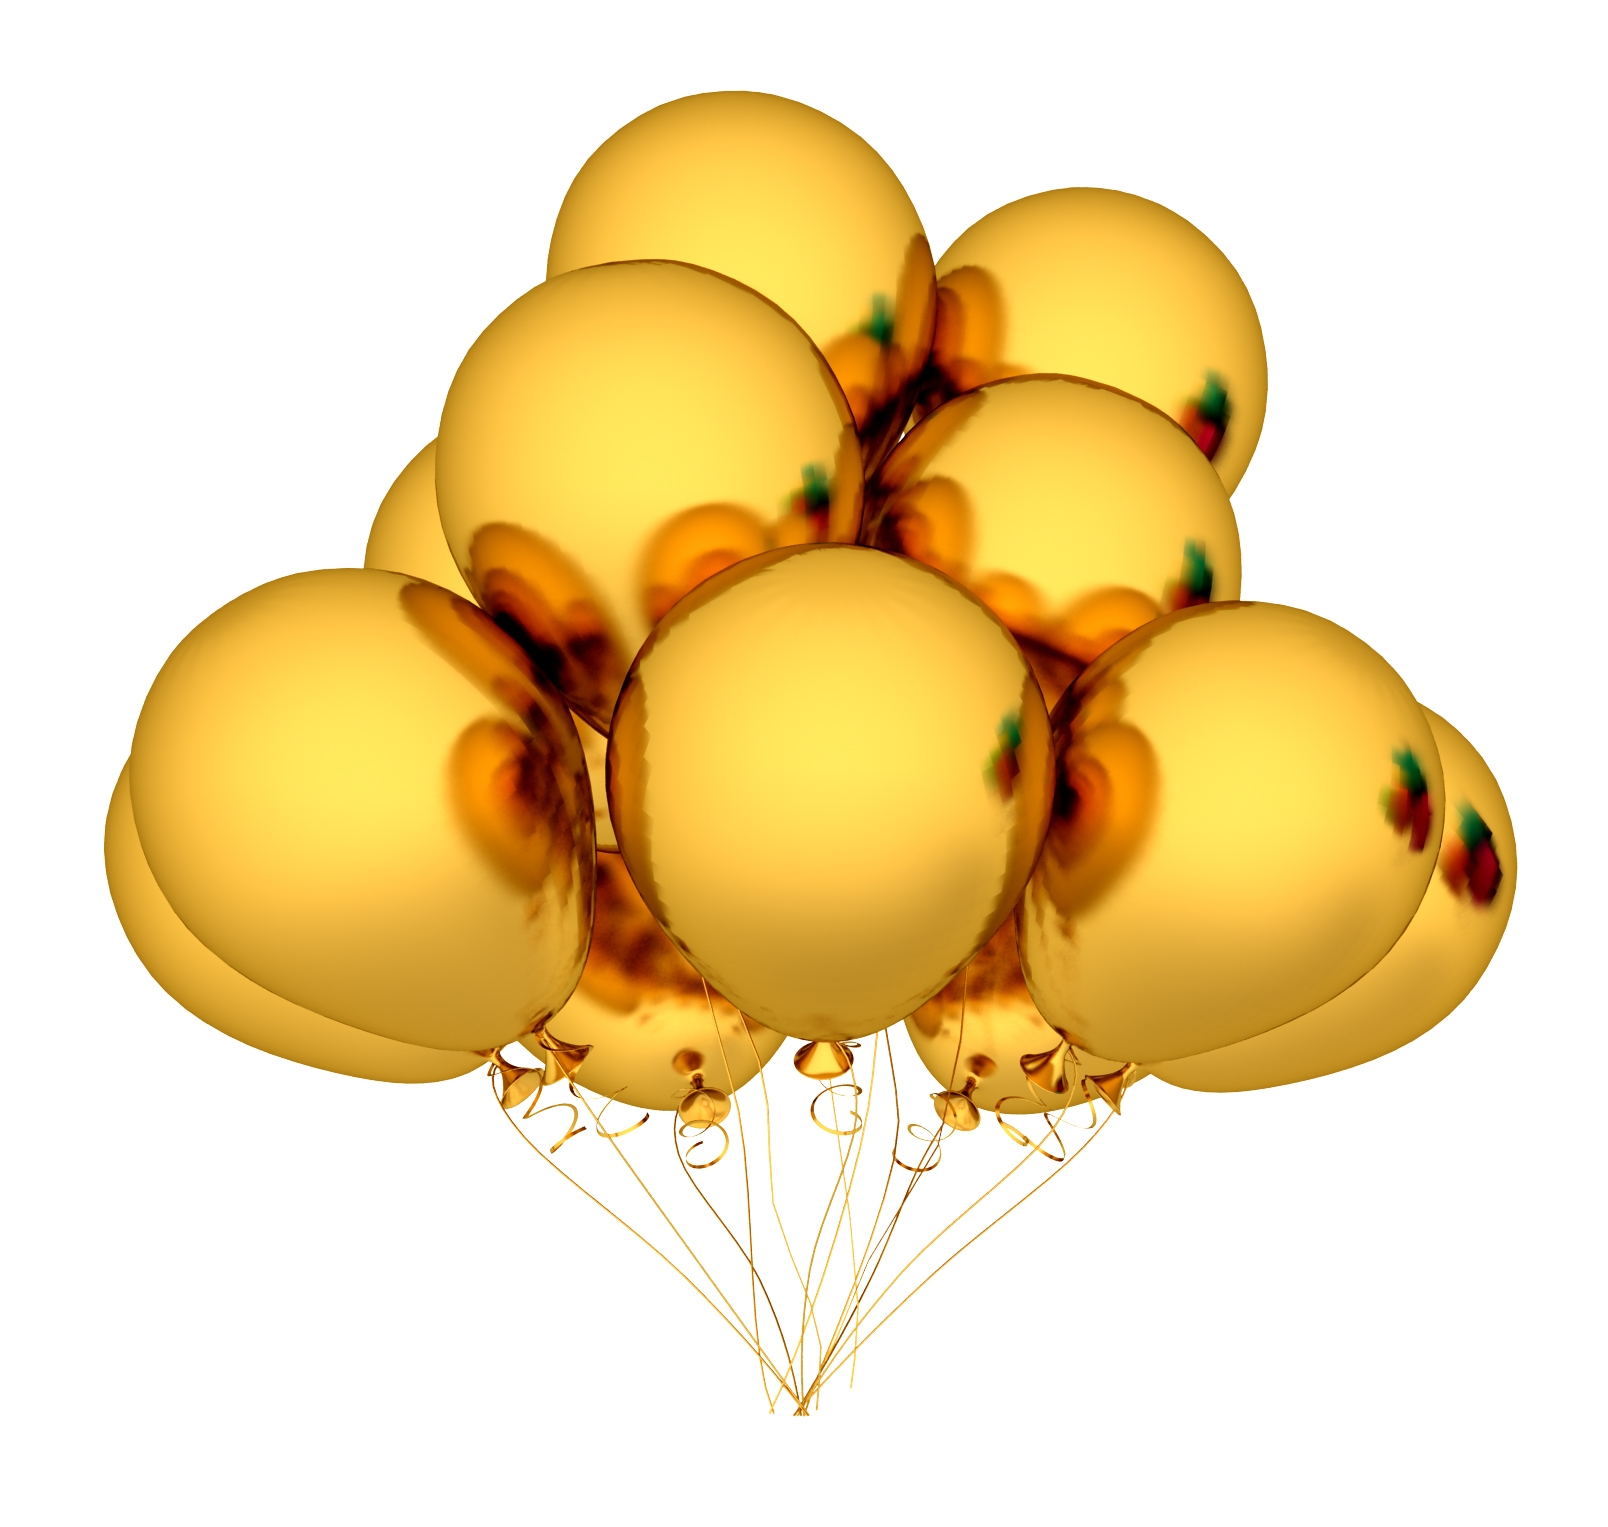 gold balloons clipart - photo #33